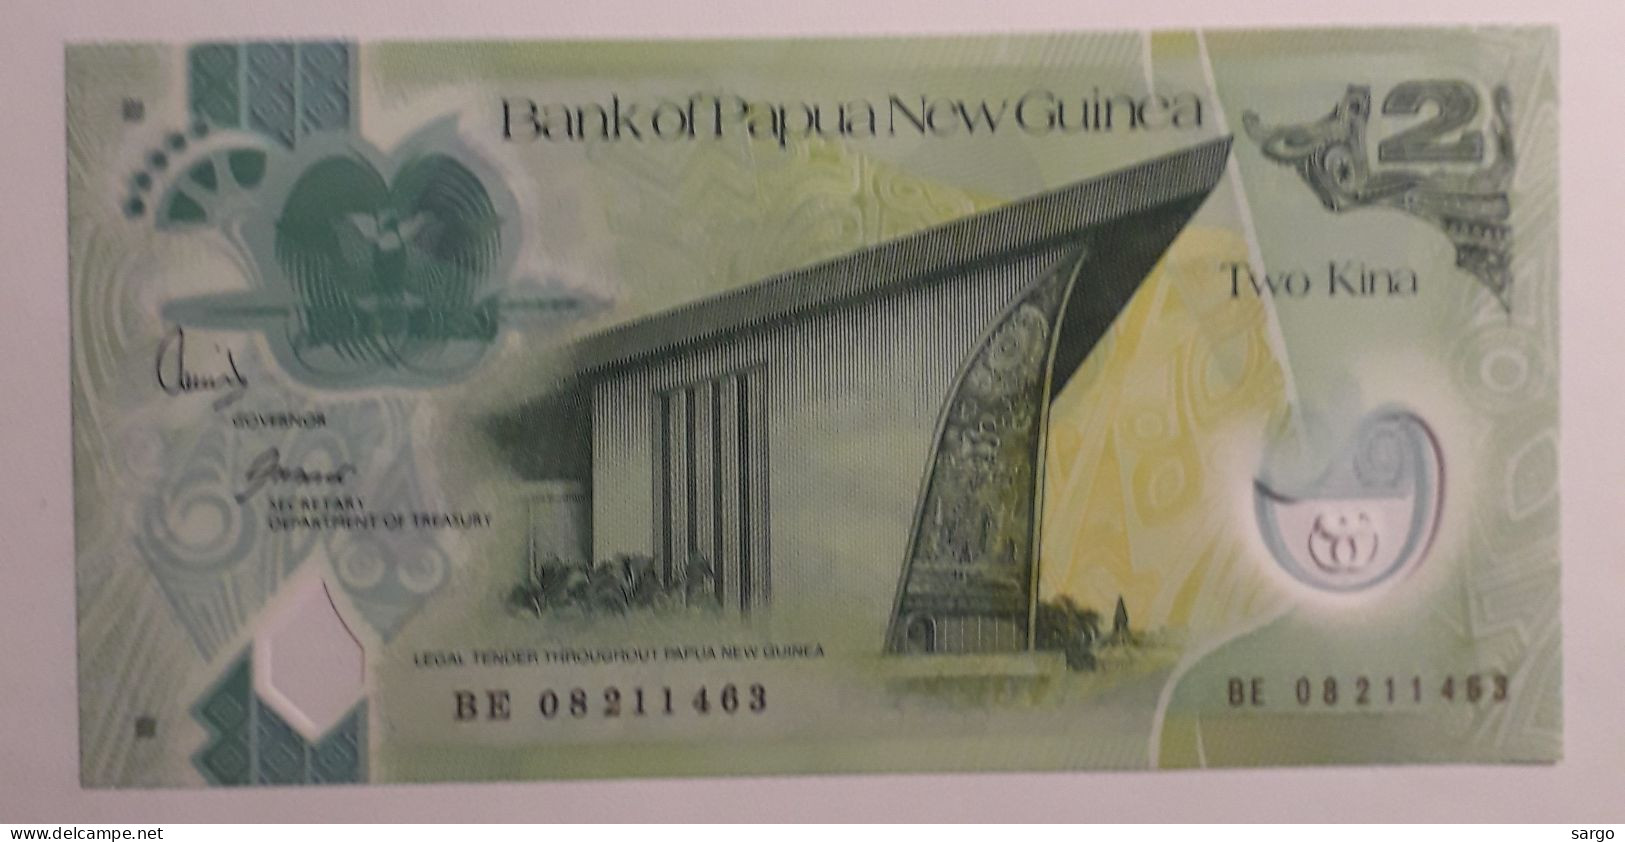 PAPUA NEW GUINEA - 2 KINA - 2007-2014 - UNCIRC P 38 - POLYMER - BANKNOTES - PAPER MONEY - CARTAMONETA - - Papua New Guinea